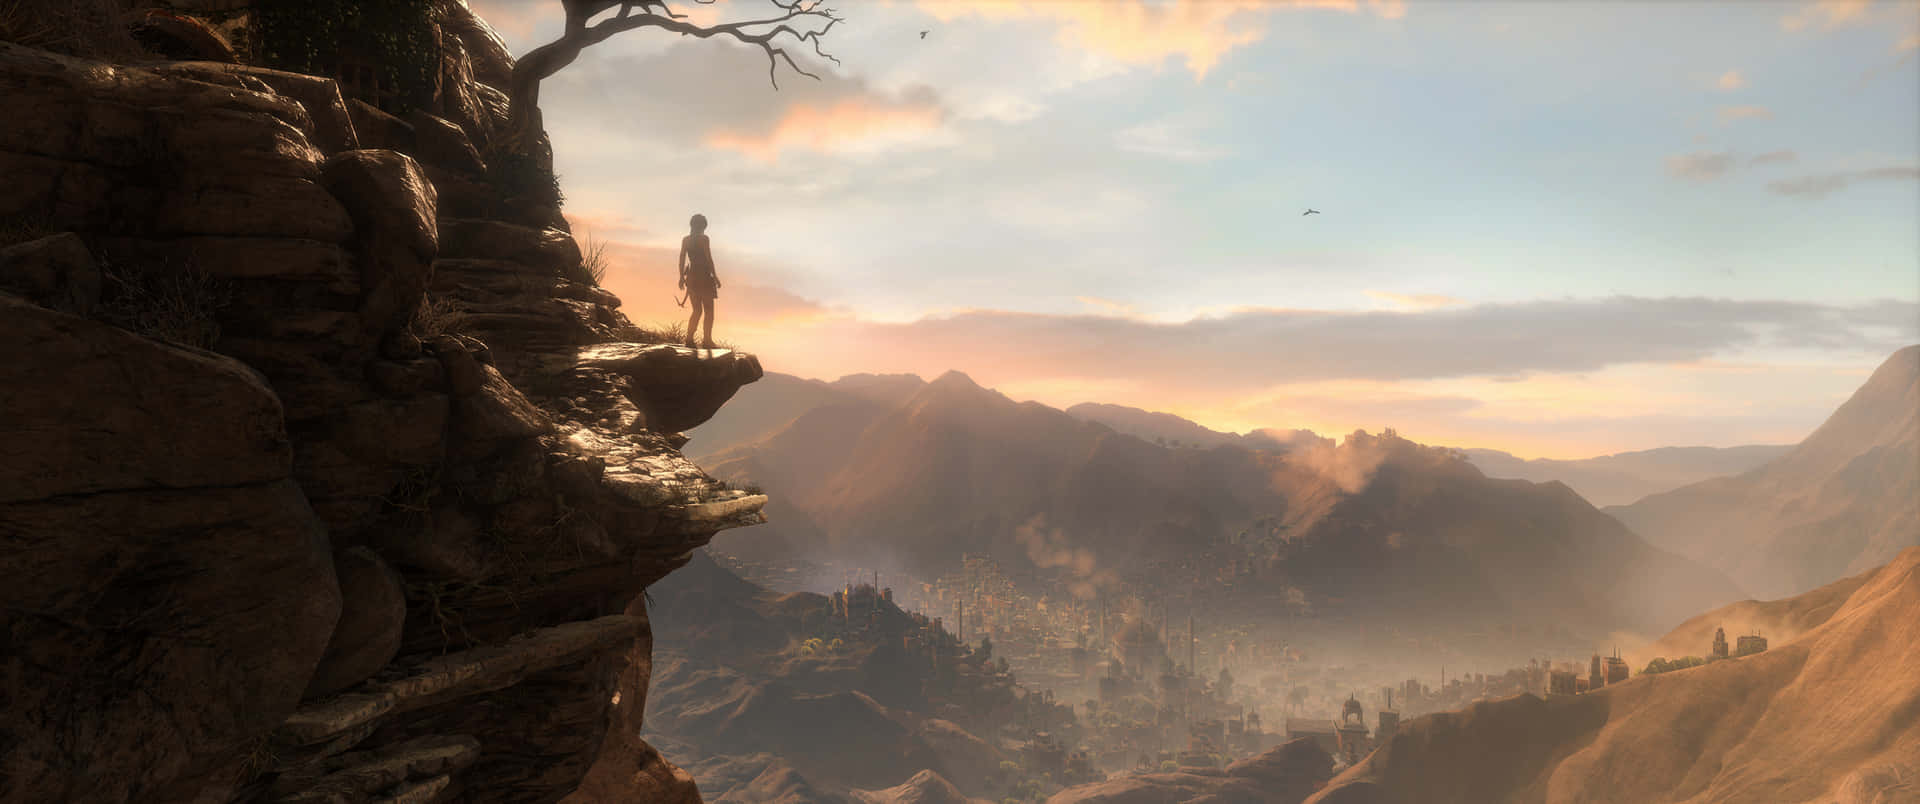 Laracroft Se Embarca En Una Aventura Traicionera En Rise Of The Tomb Raider.